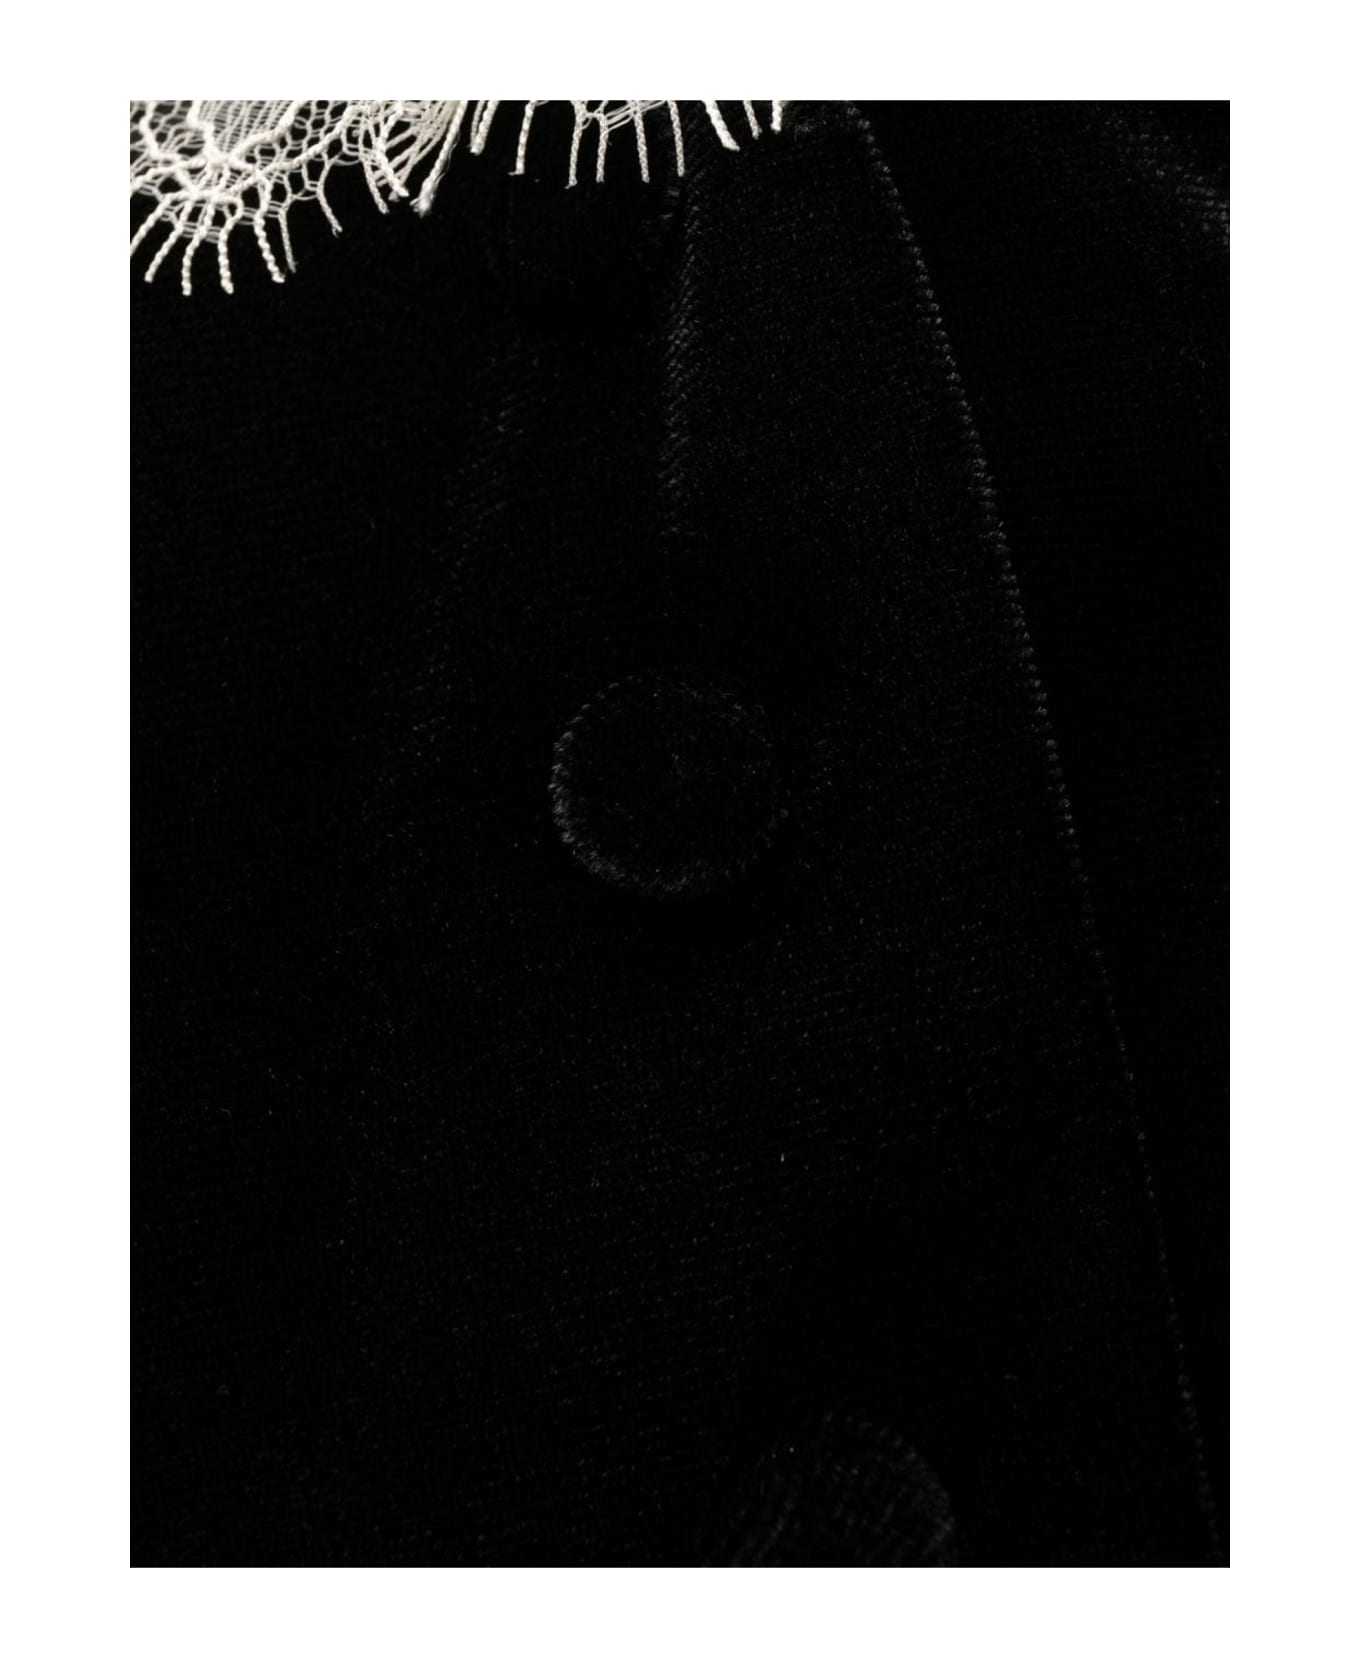 Philosophy di Lorenzo Serafini Black Stretch Velvet Dress Dress - NERO